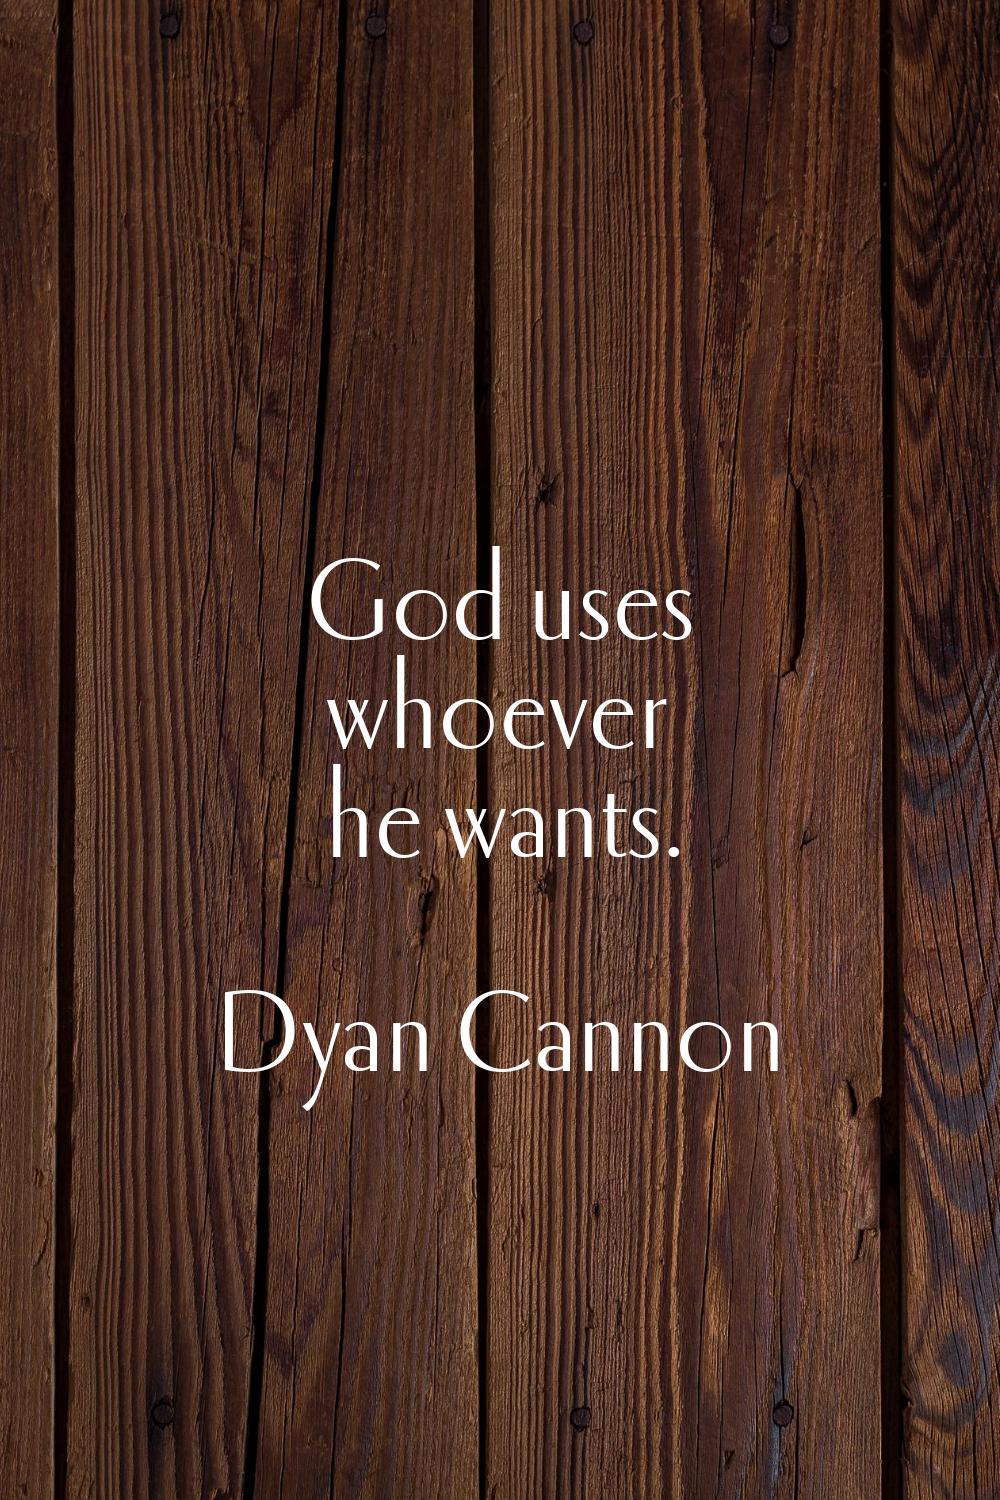 God uses whoever he wants.